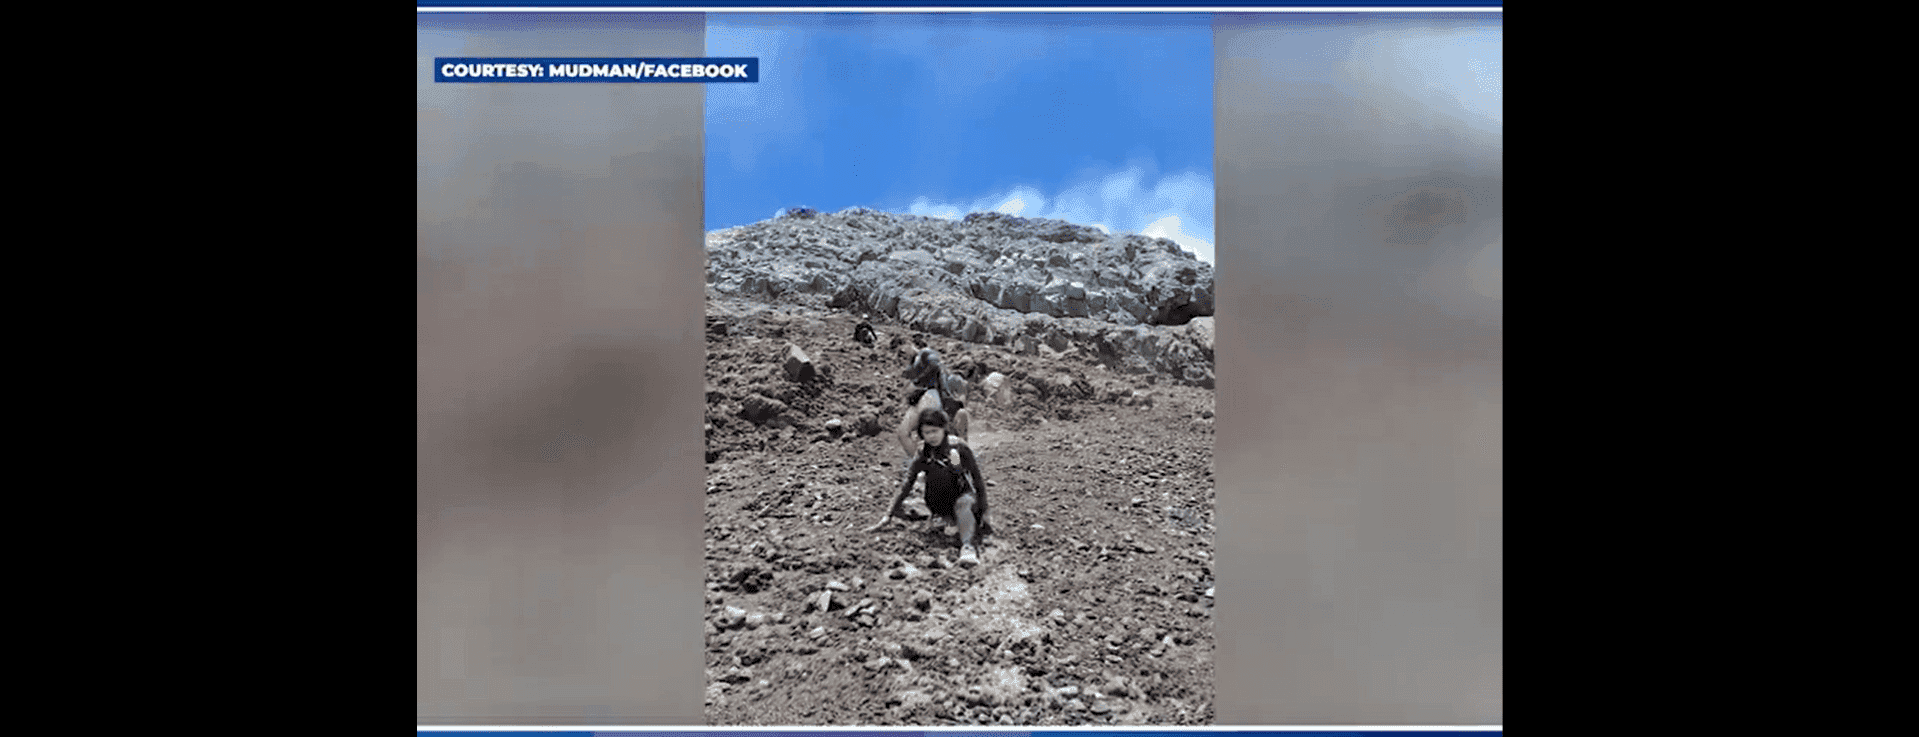 Individuals caught hiking at Mayon Volcano to face penalties - Albay governor